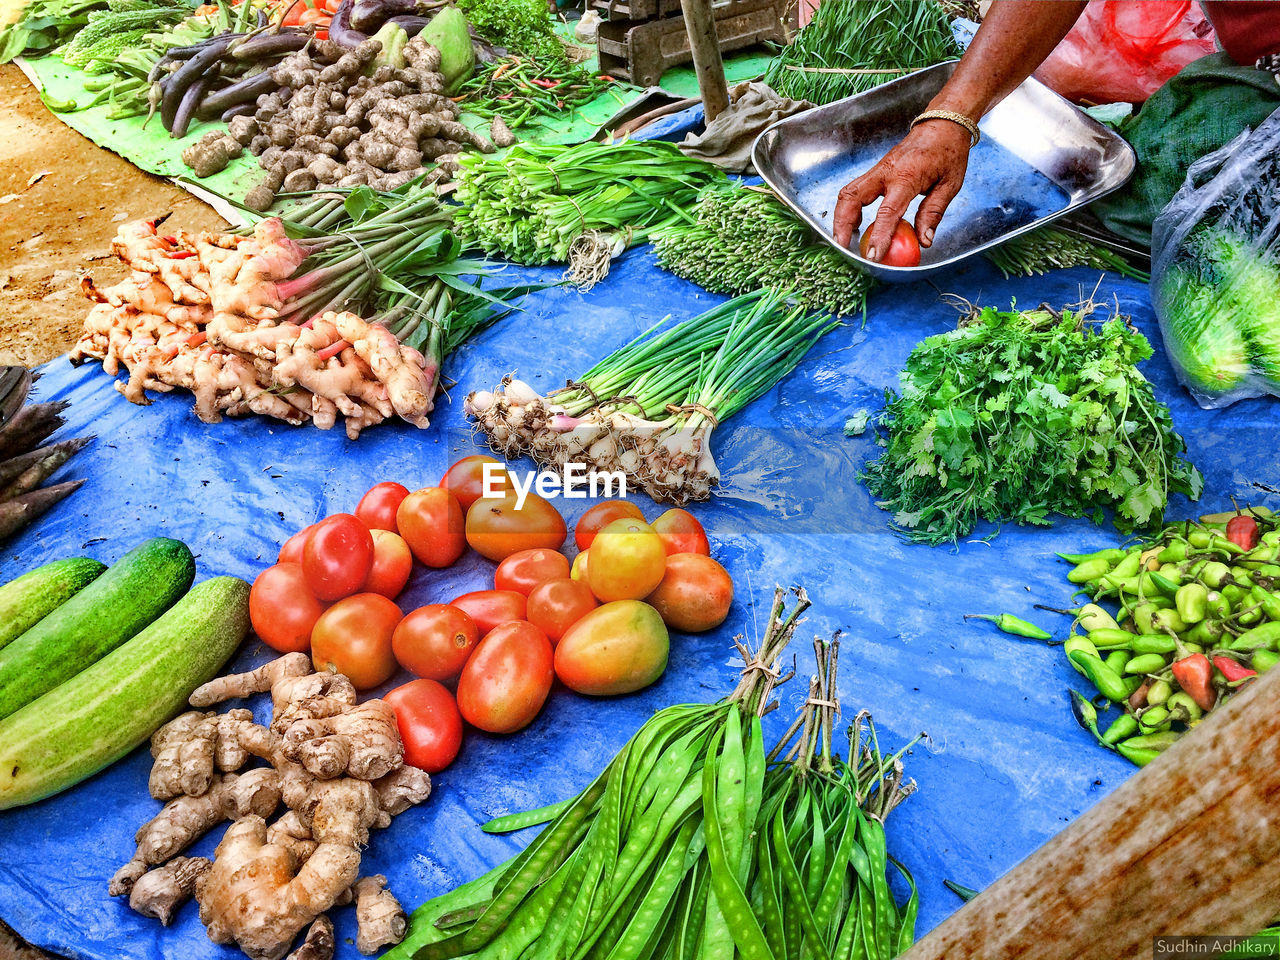 livelihood. Colorful Colors Colours Green Life Poor  Seller Selling Tomato Vegetable Vegetables Vegetarian Food